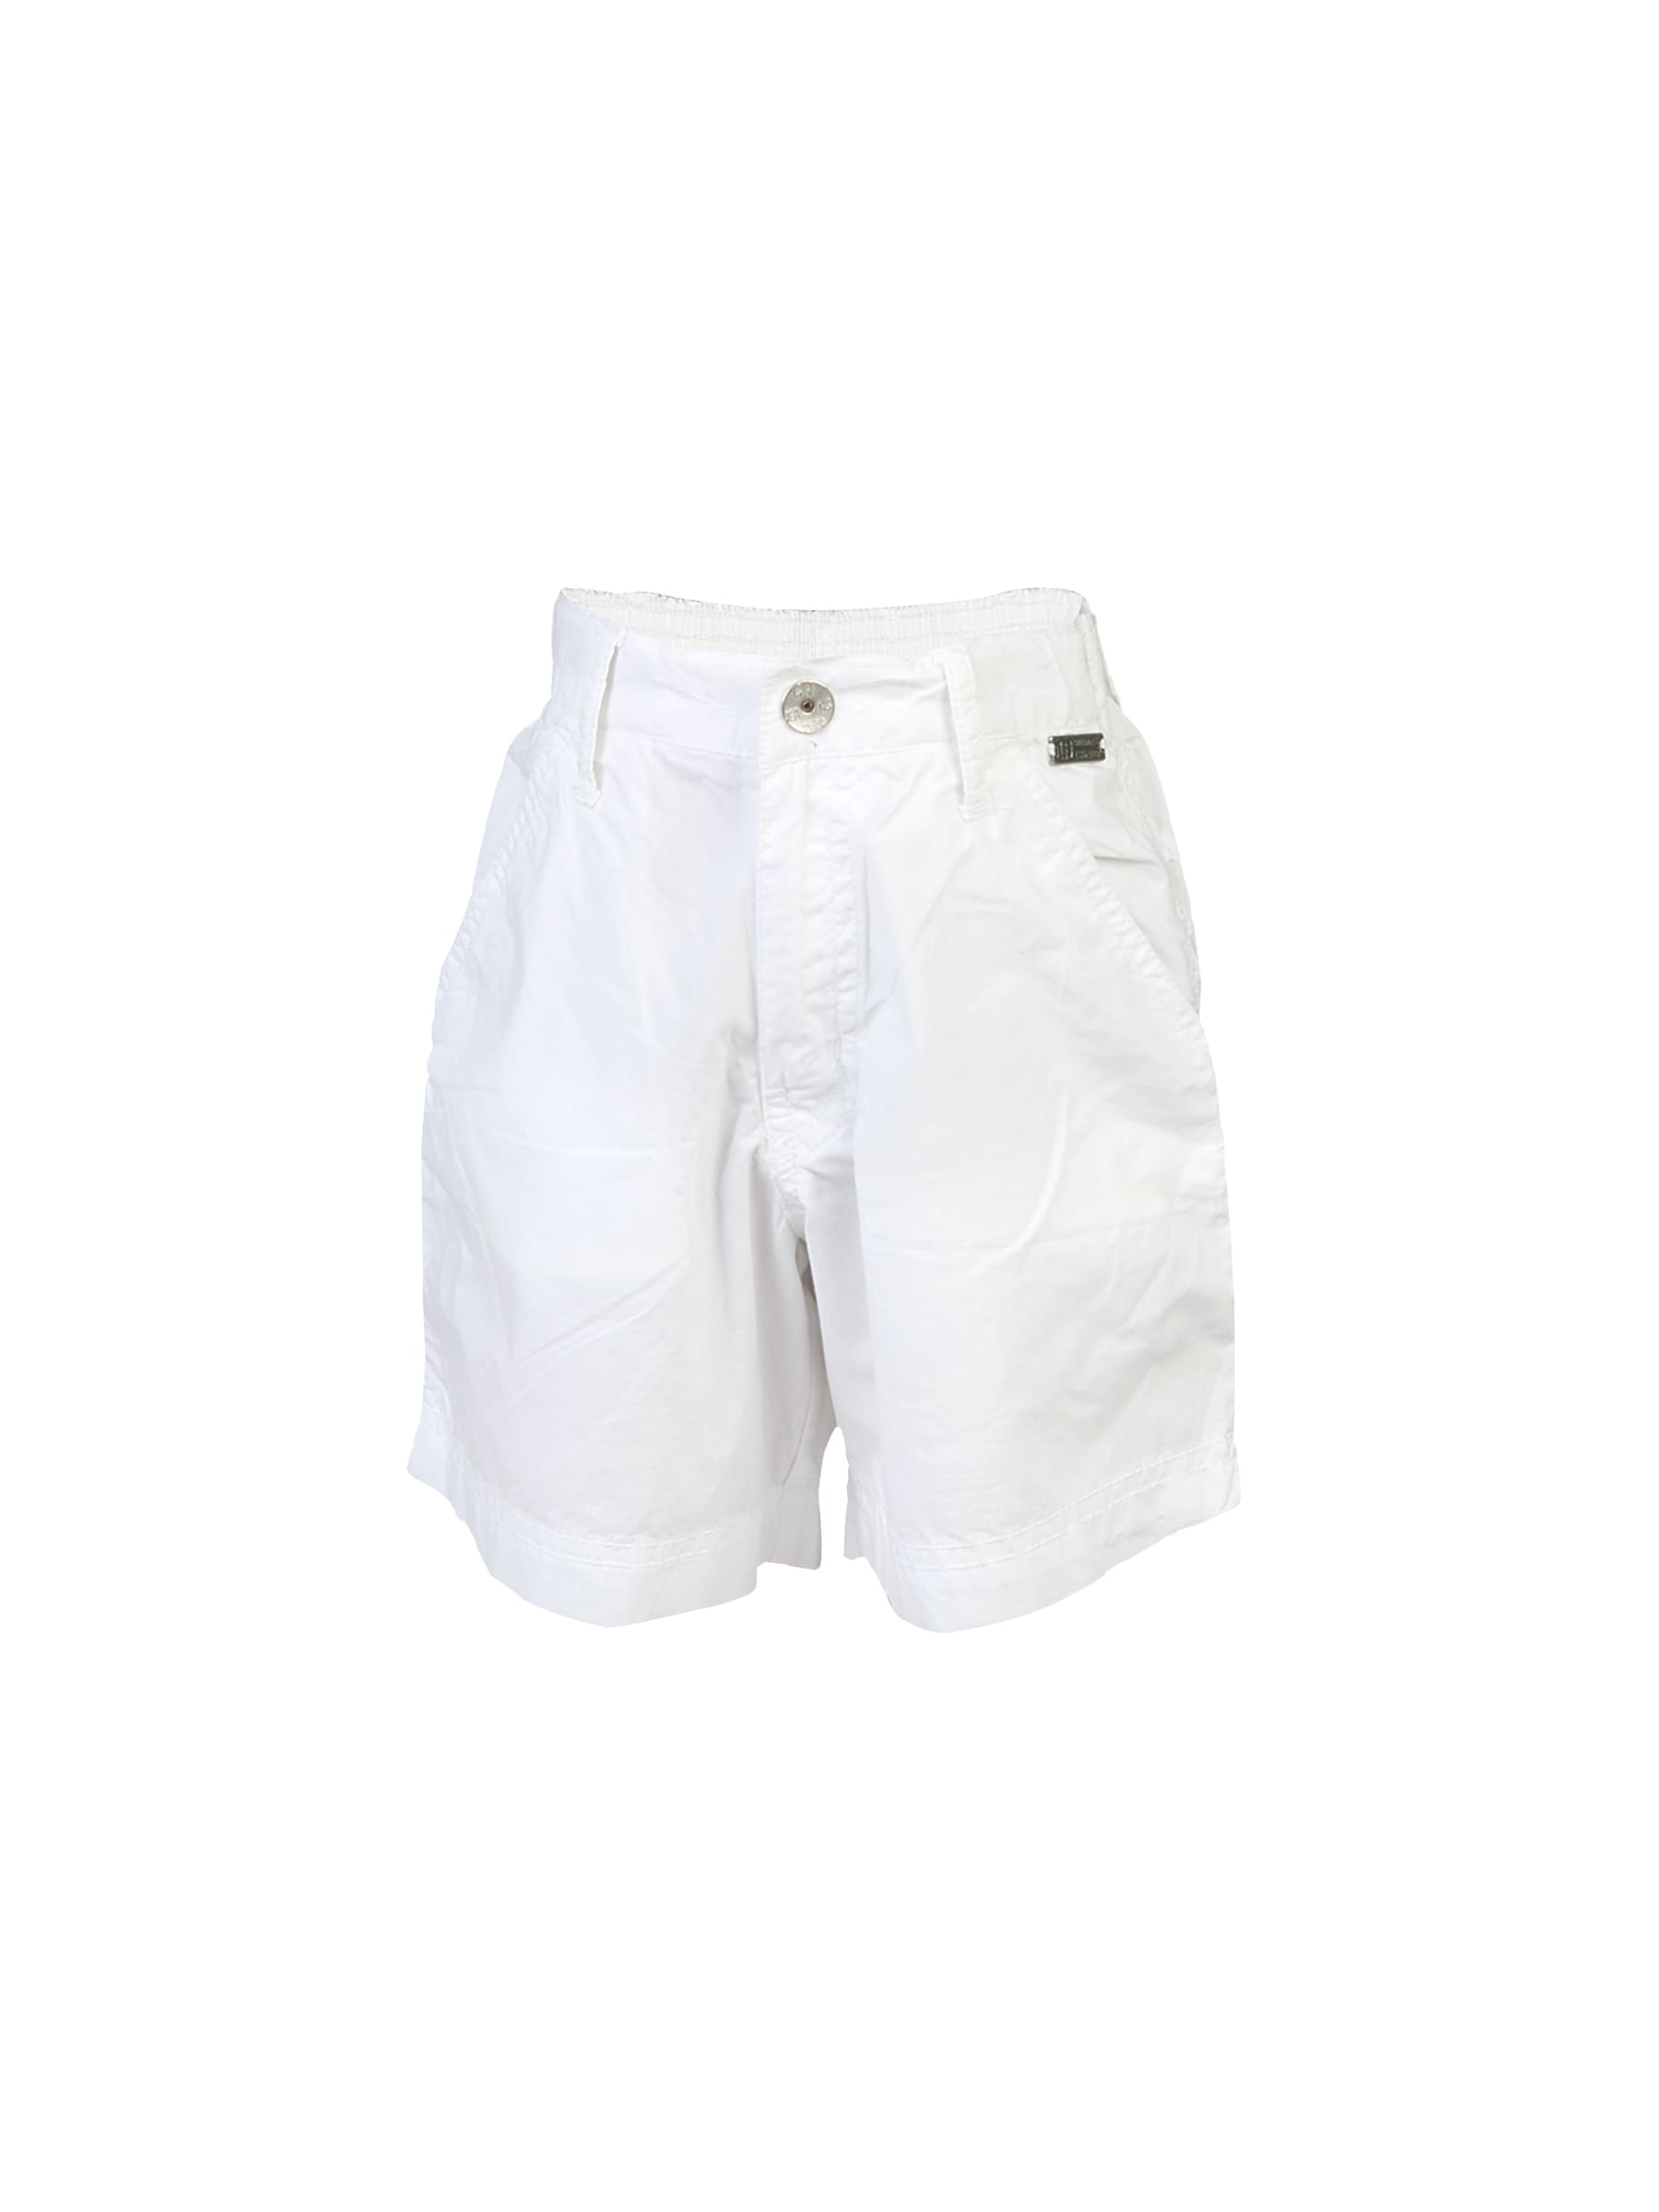 Gini and Jony Kids Boys Solid White Shorts